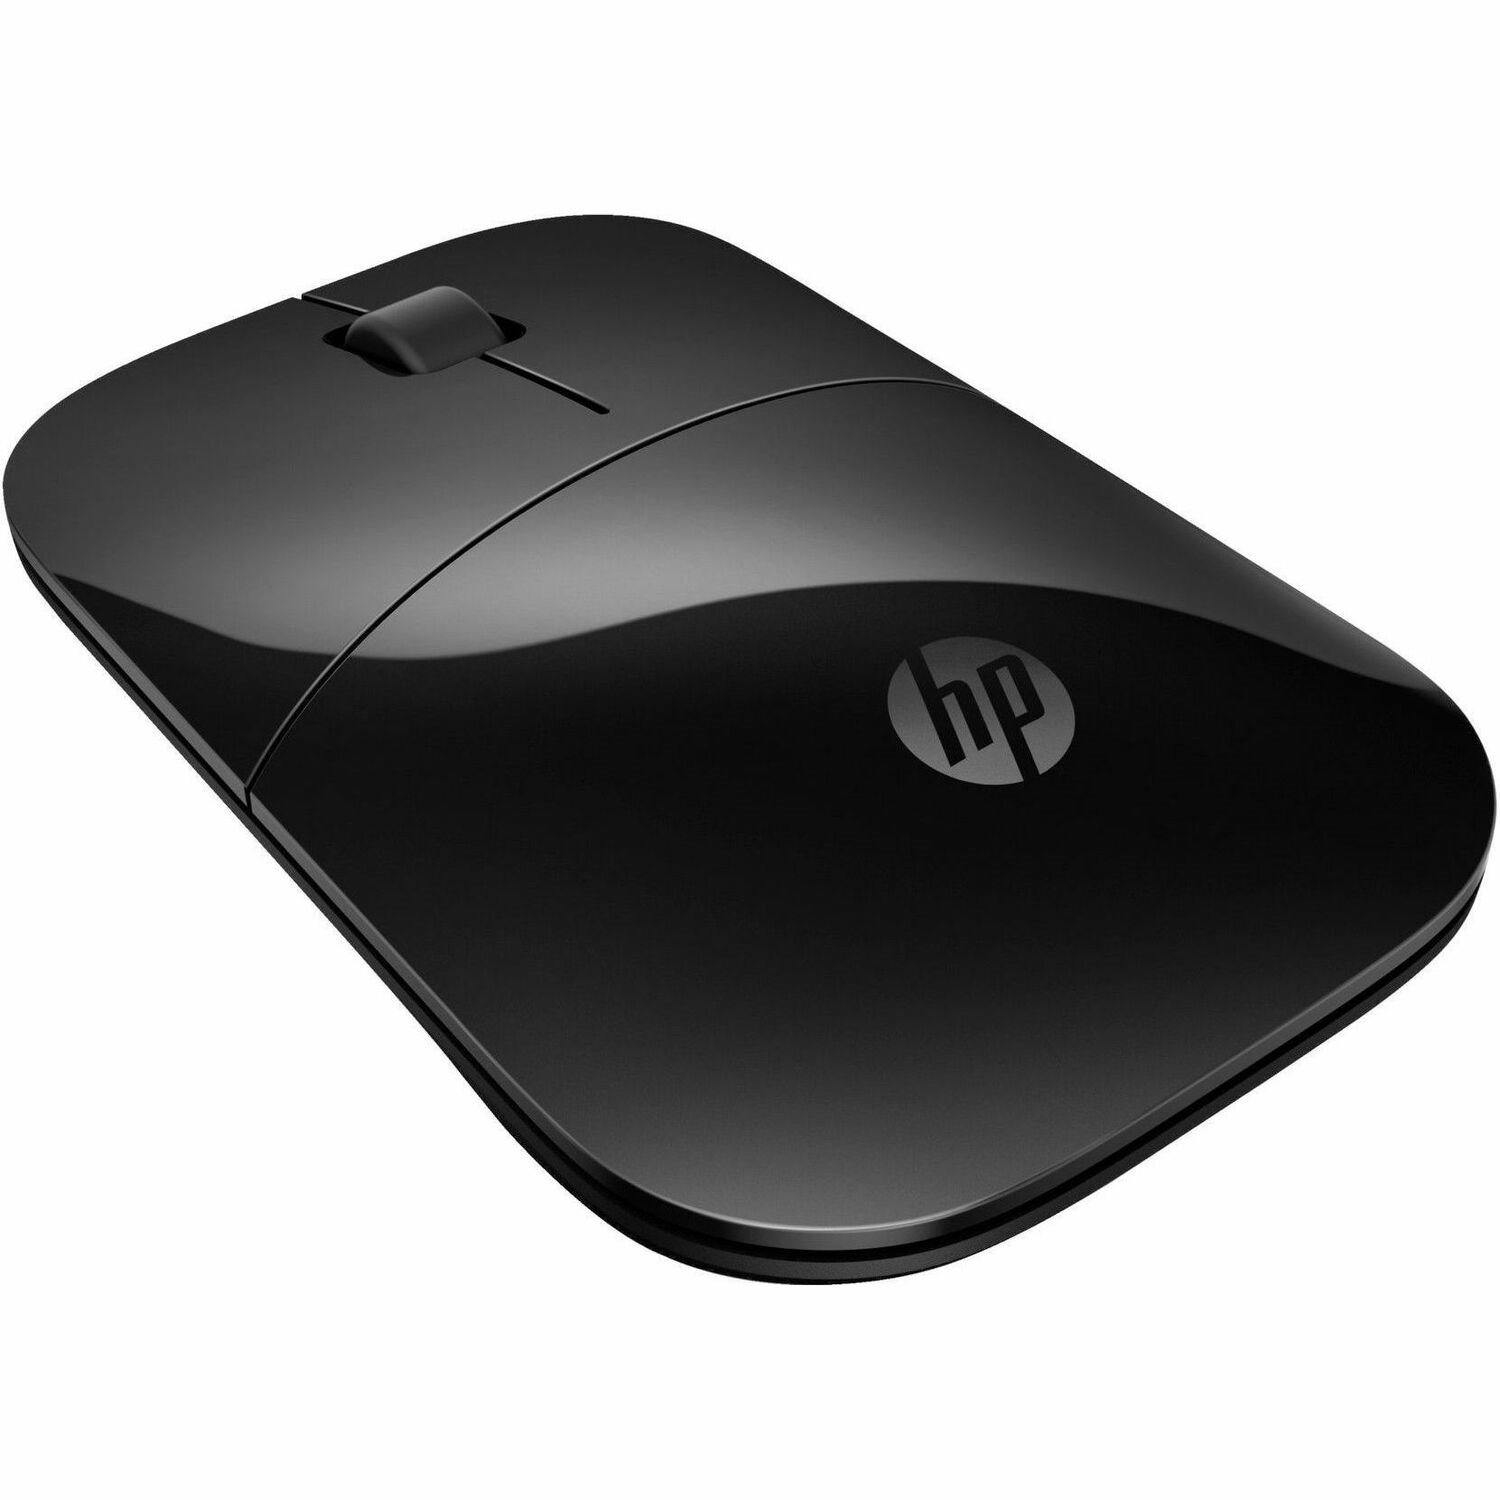 HP Z3700 Mouse